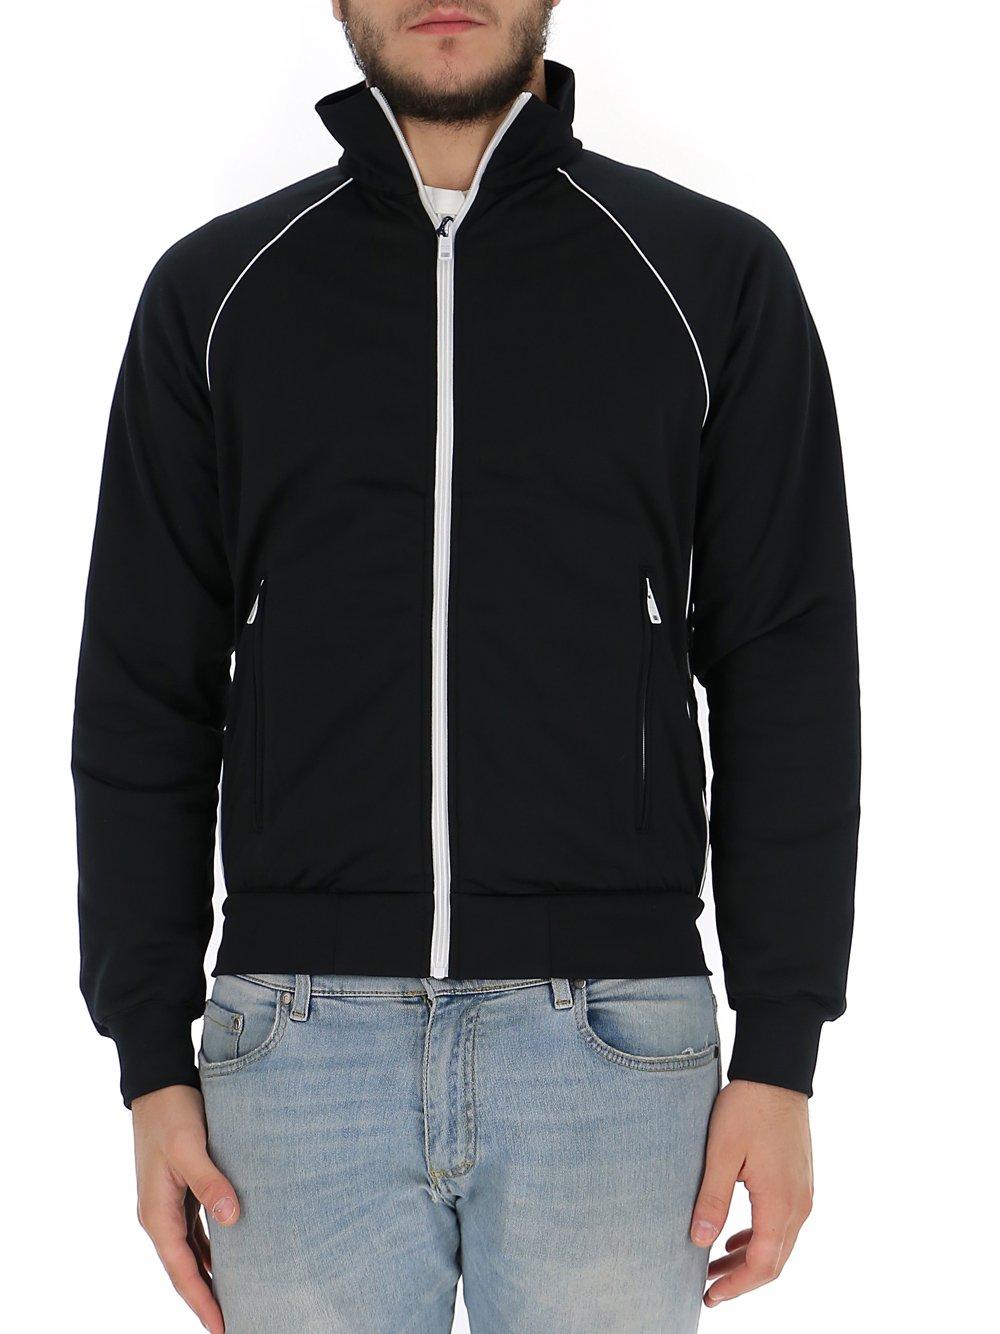 Prada Synthetic Logo Track Jacket in Black for Men - Lyst